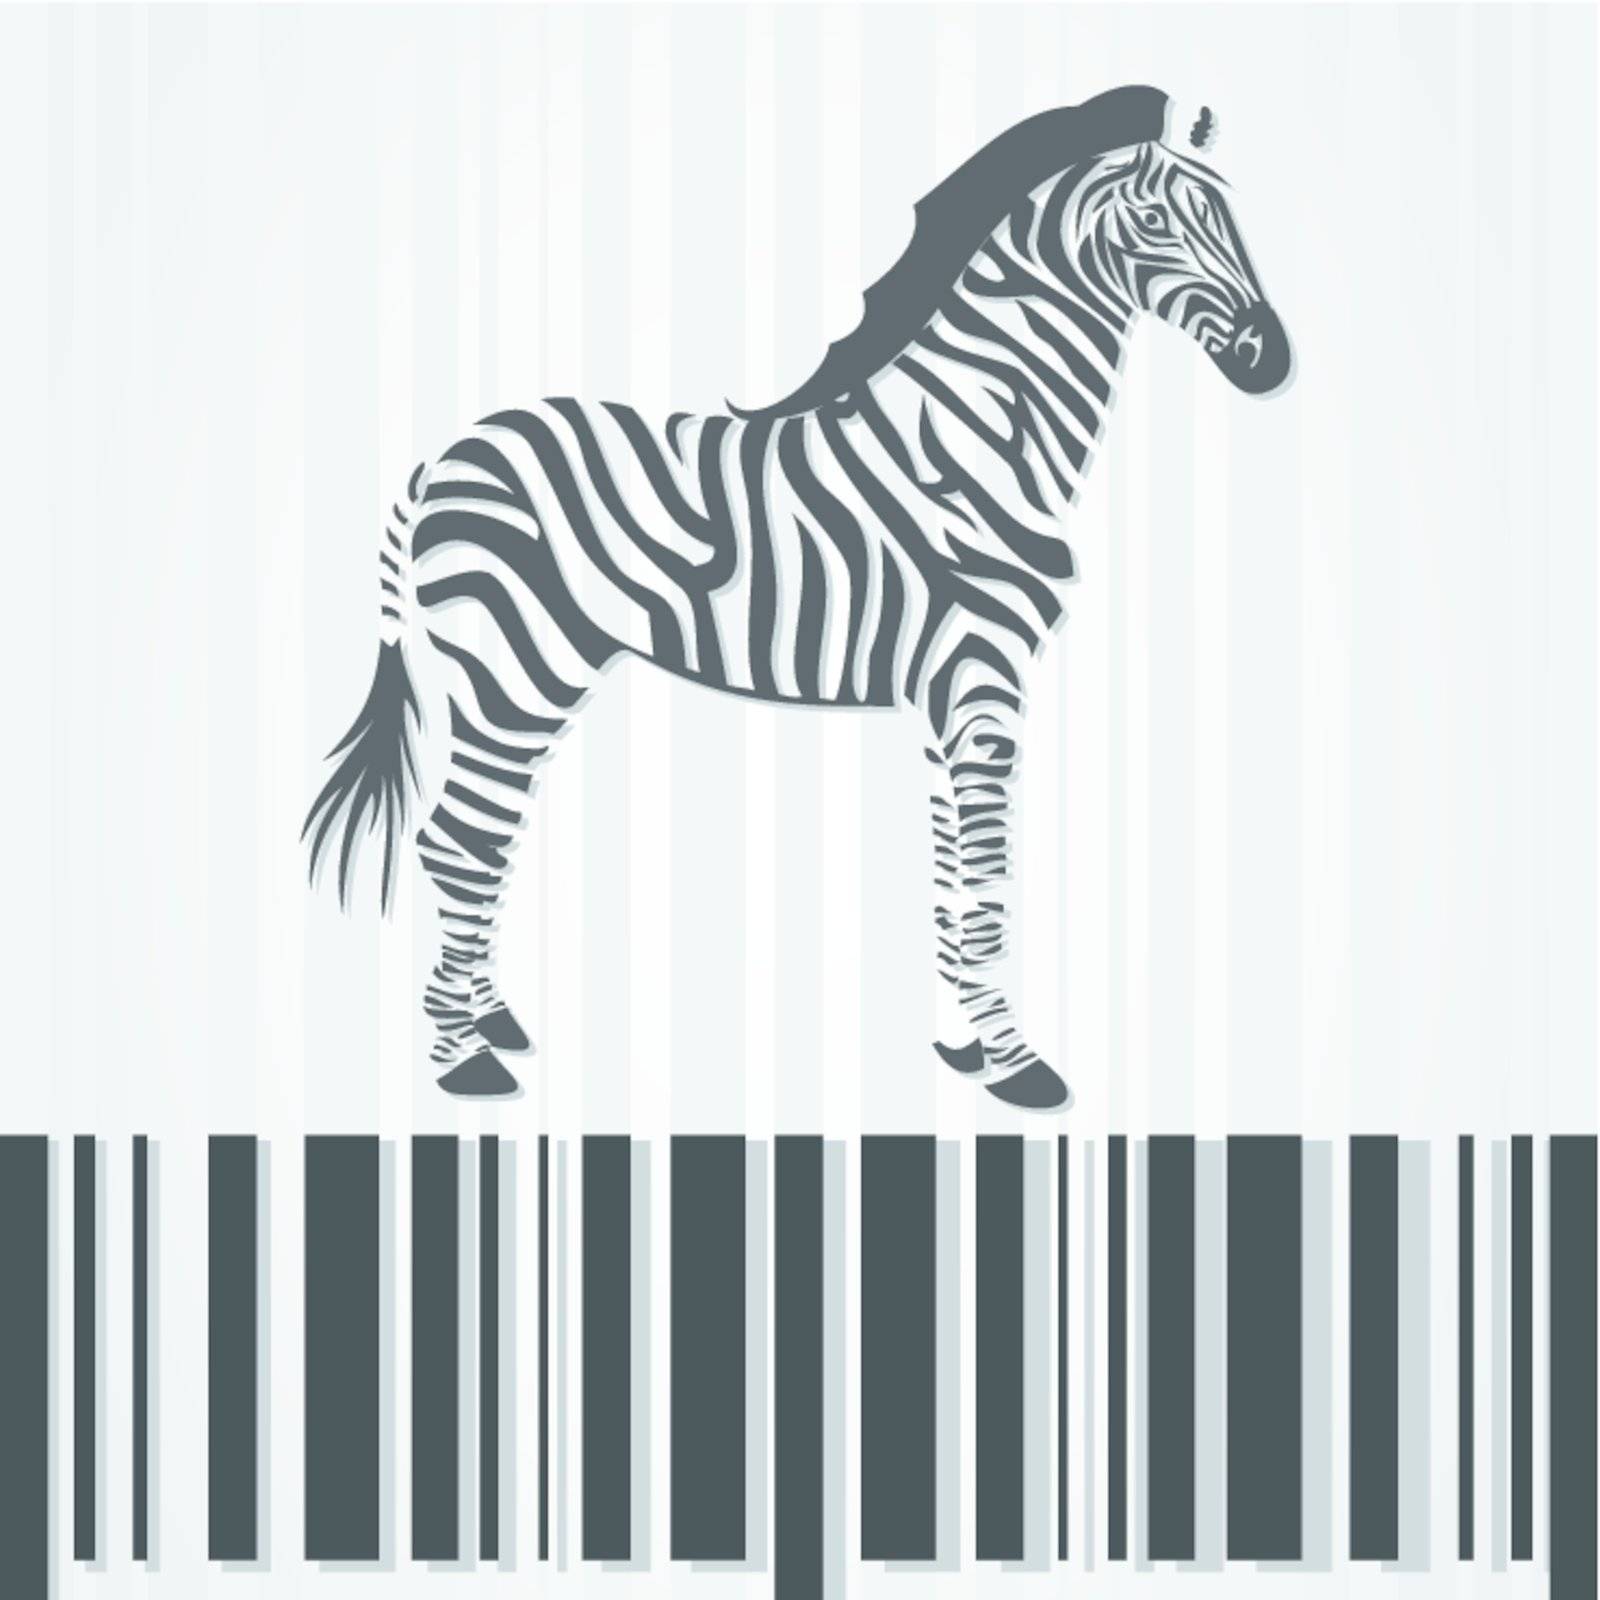 Zebra by aleksander1